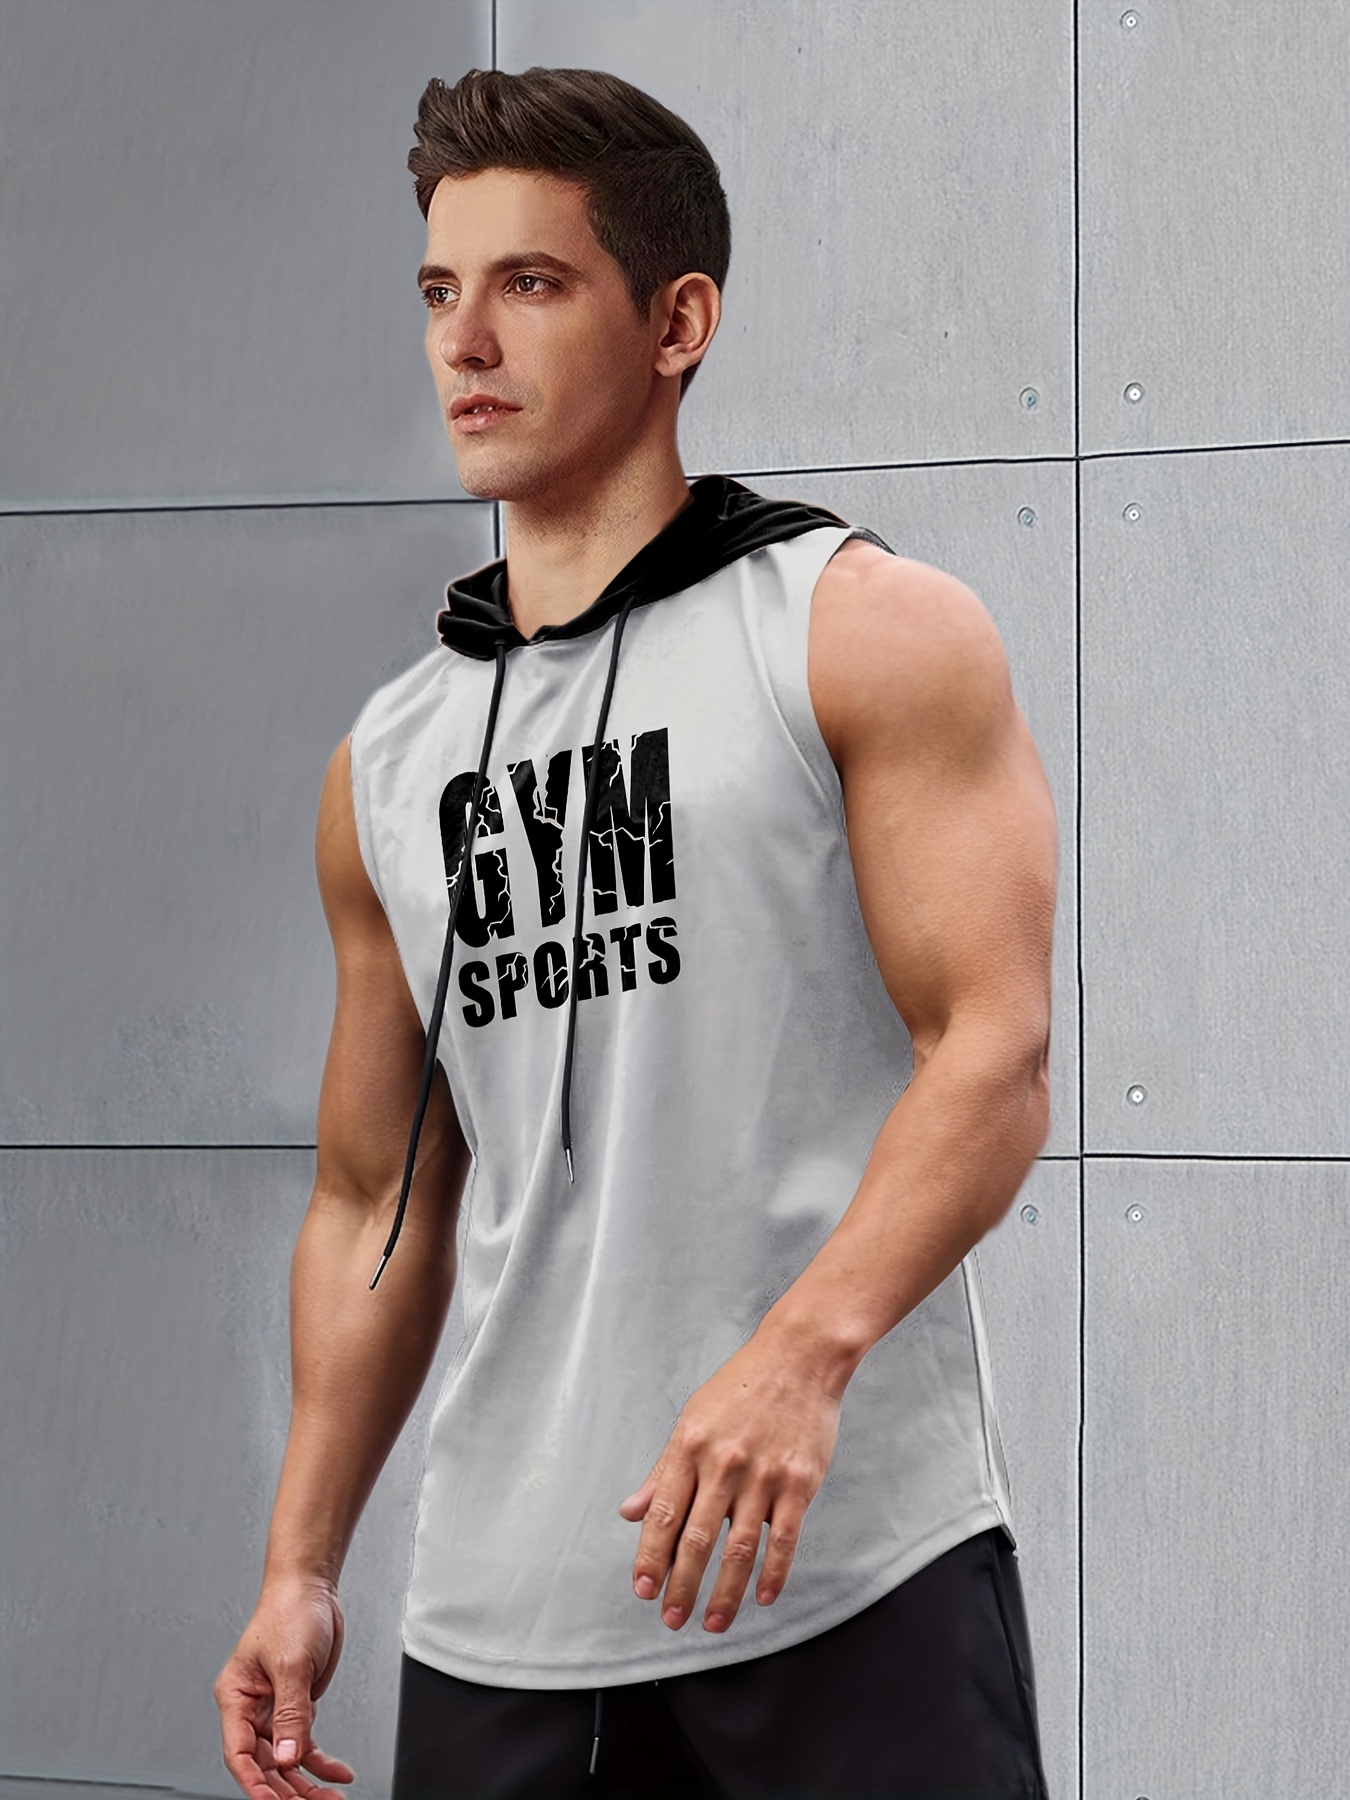 Men's Gym Tops, T-Shirts Vests & Hoodies